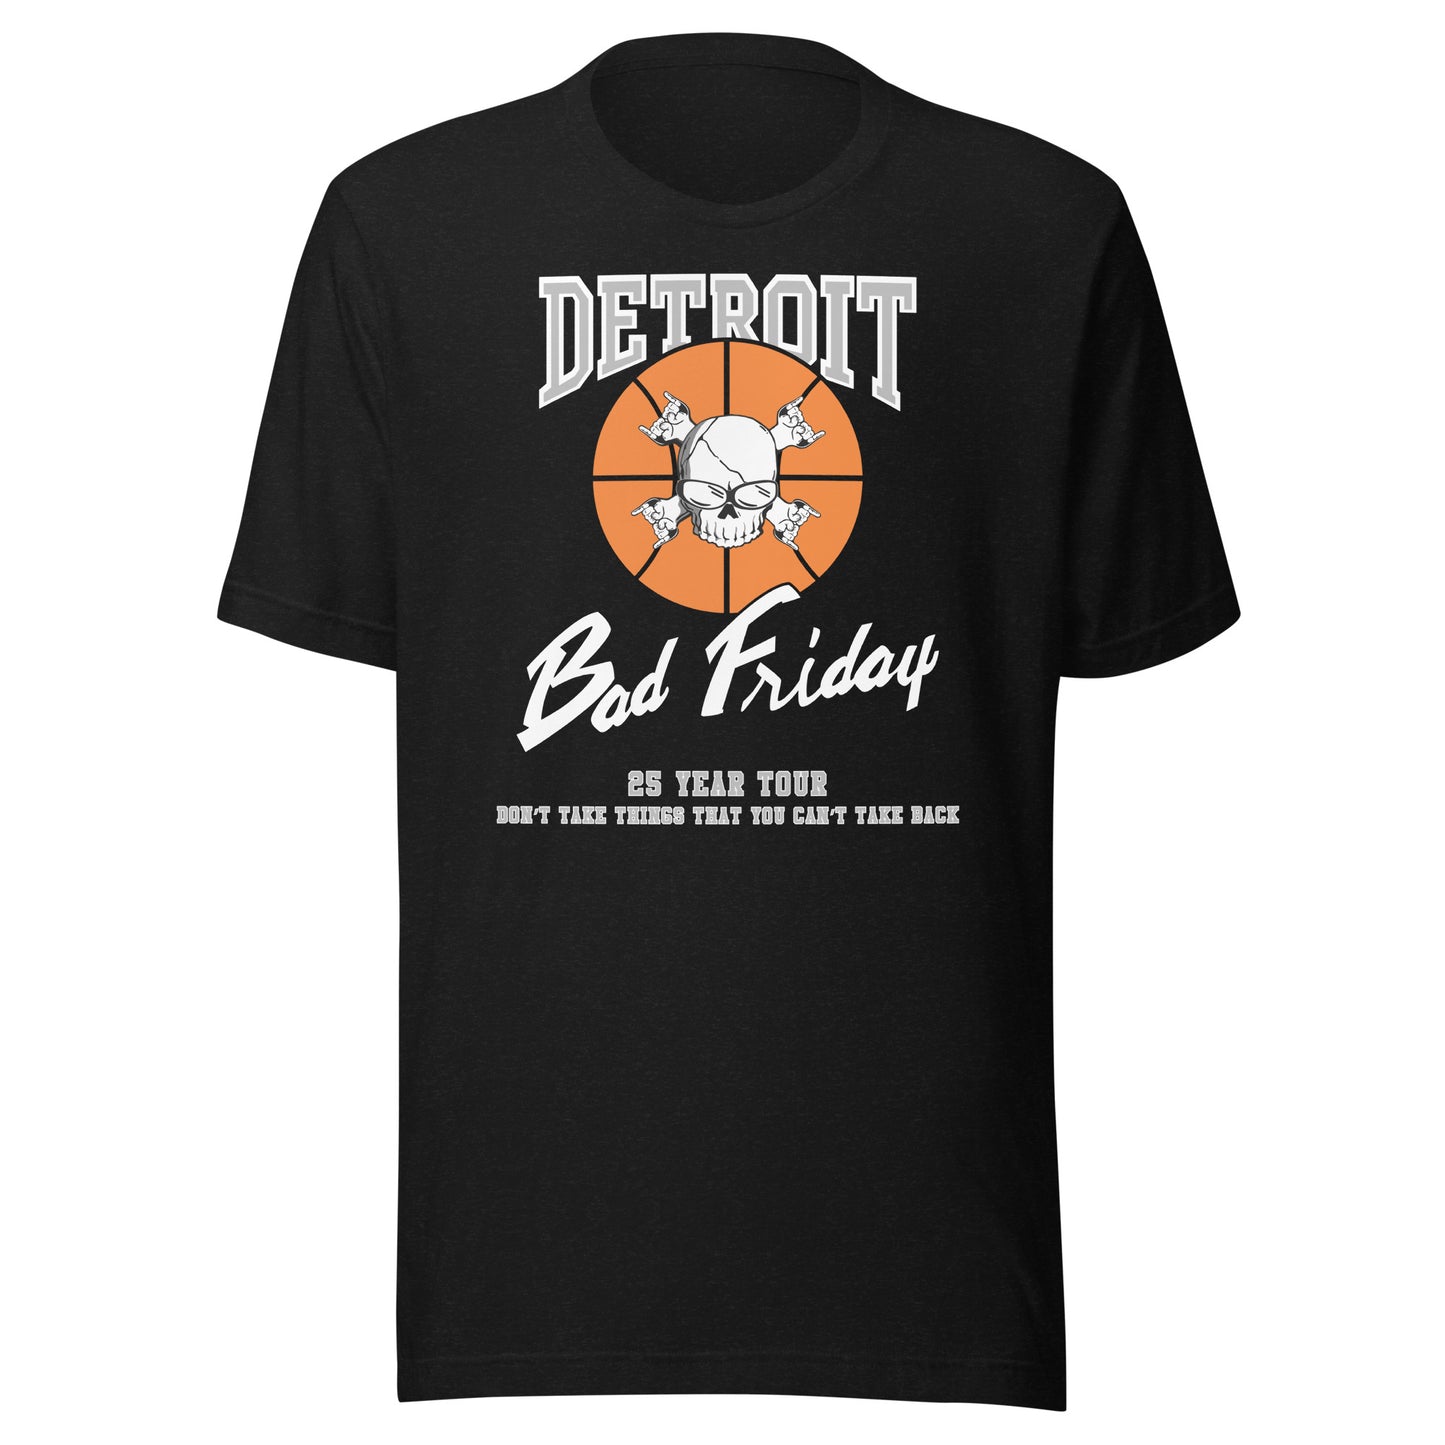 Detroit Bad Friday (Bad Boys)  25 Year Tour  Umphreys Lot Shirt